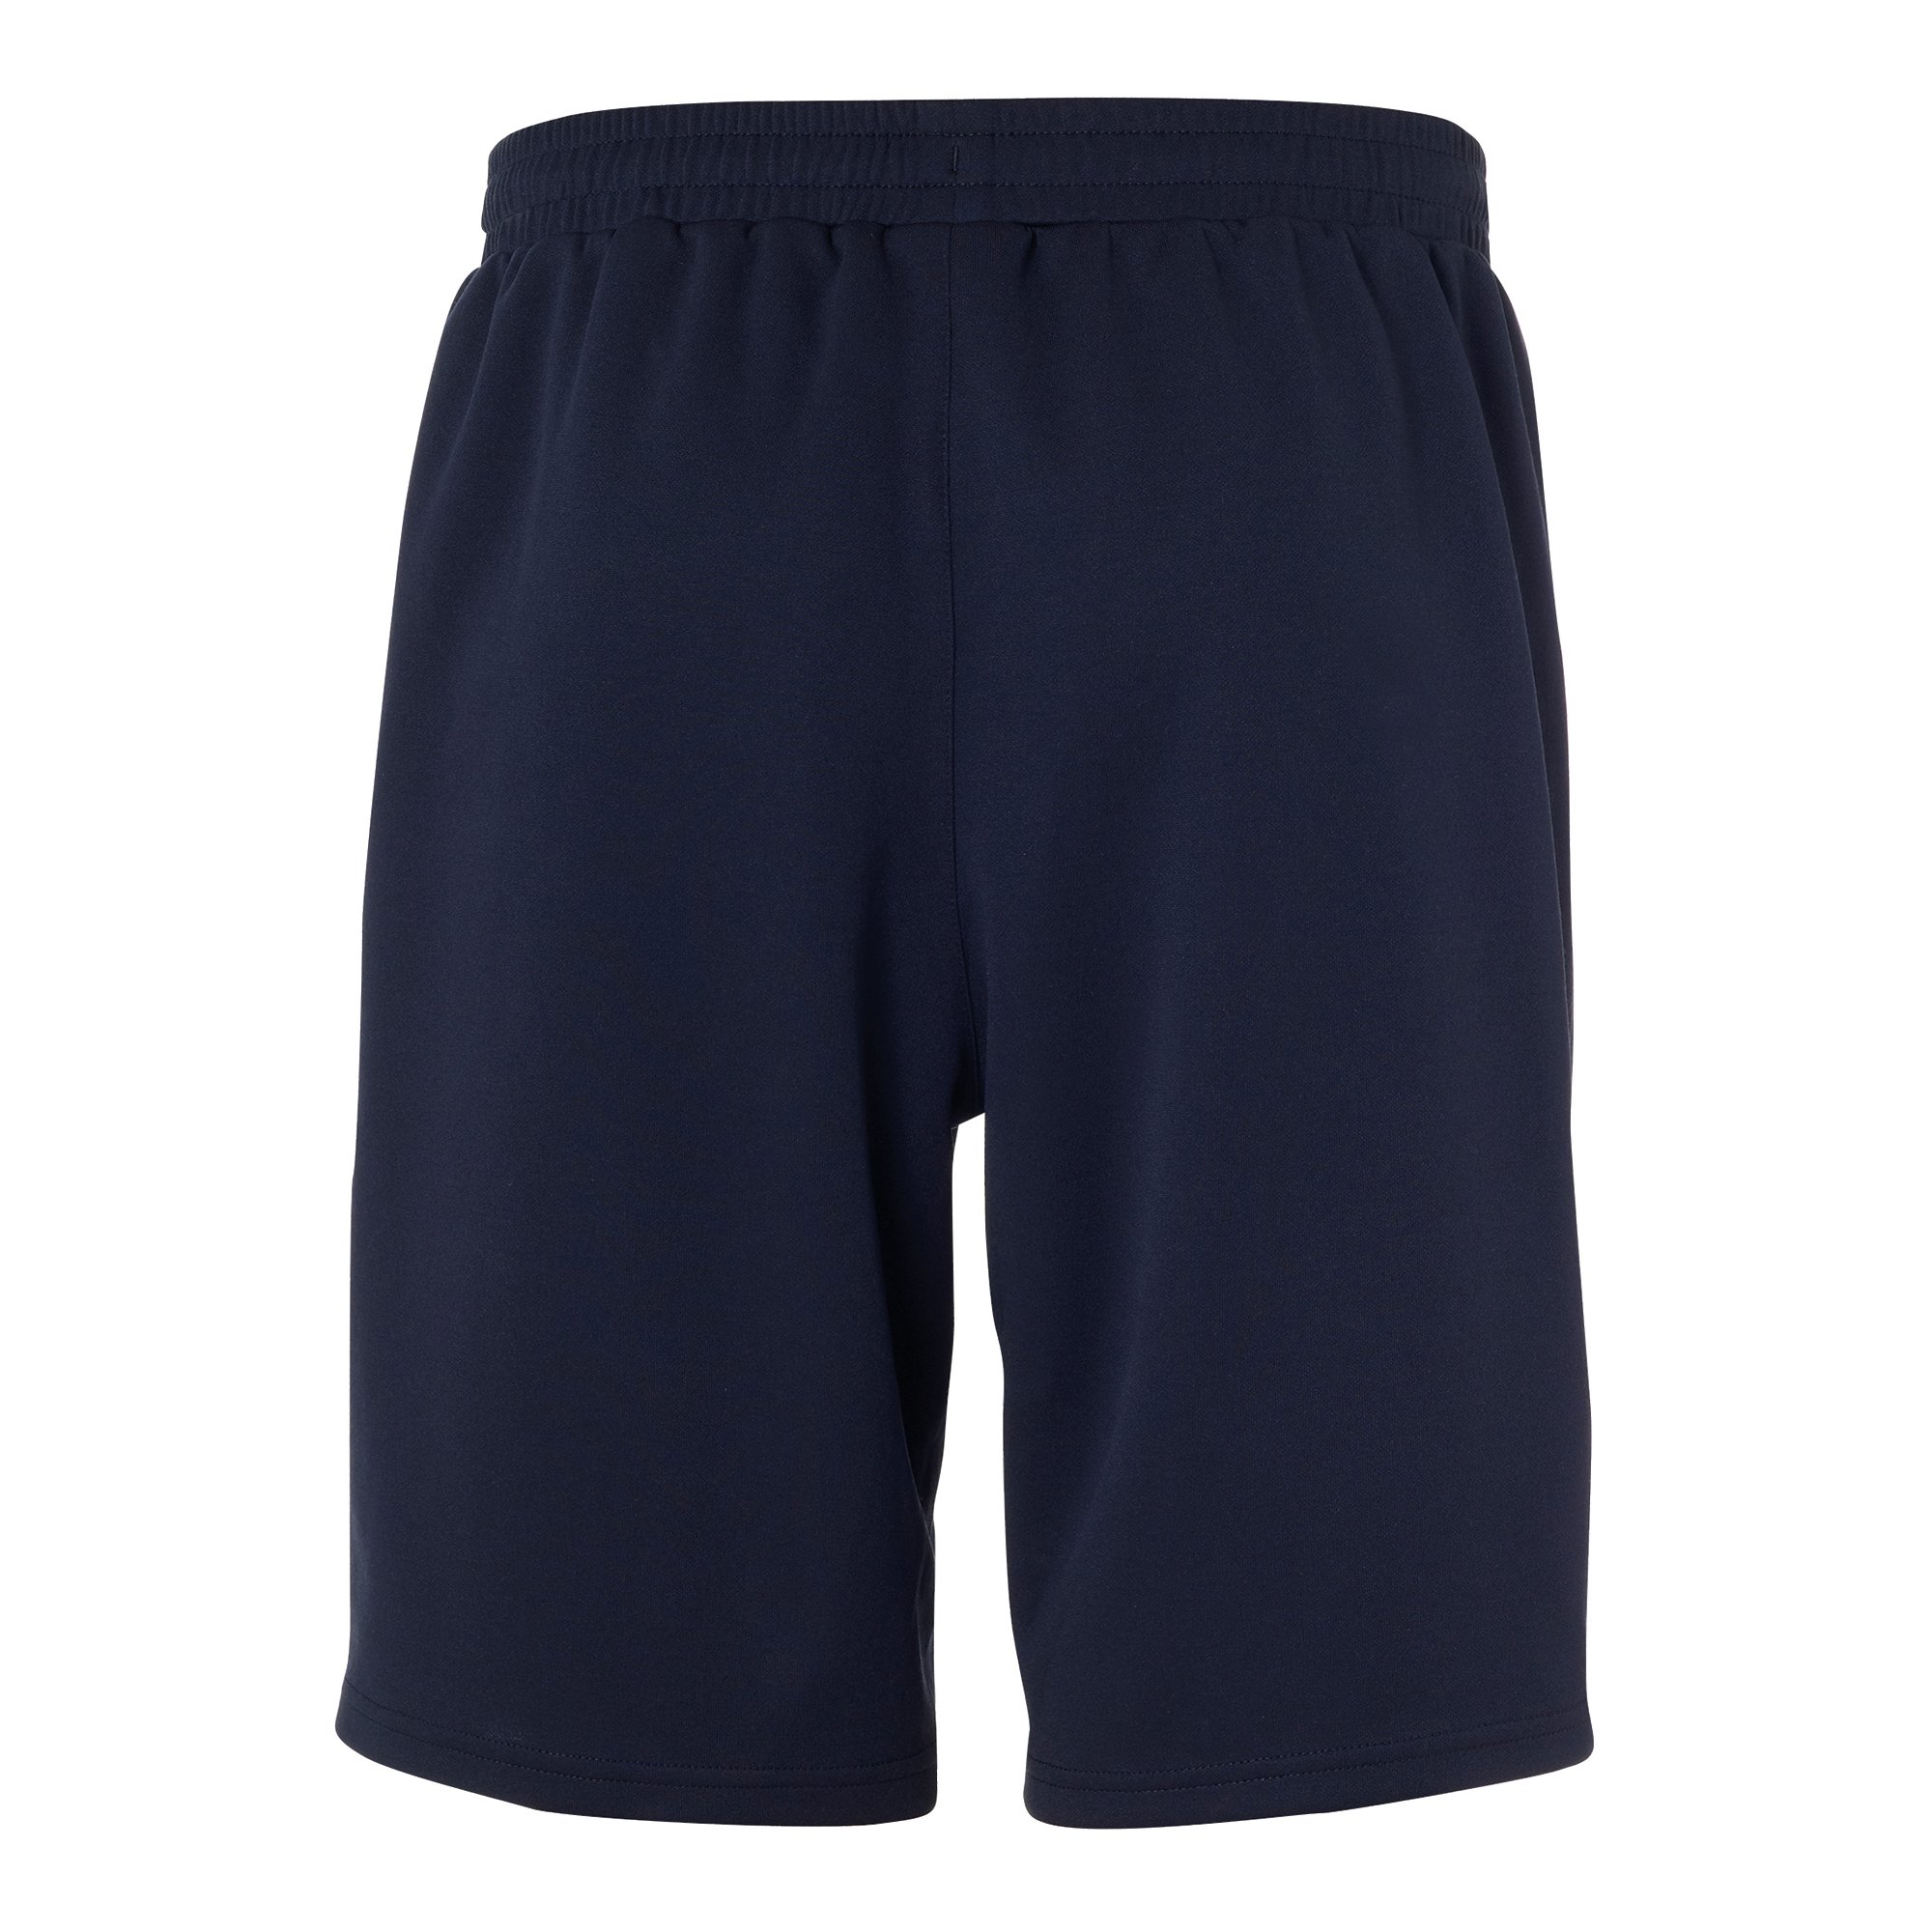 Uhlsport Essential Pes-Shorts